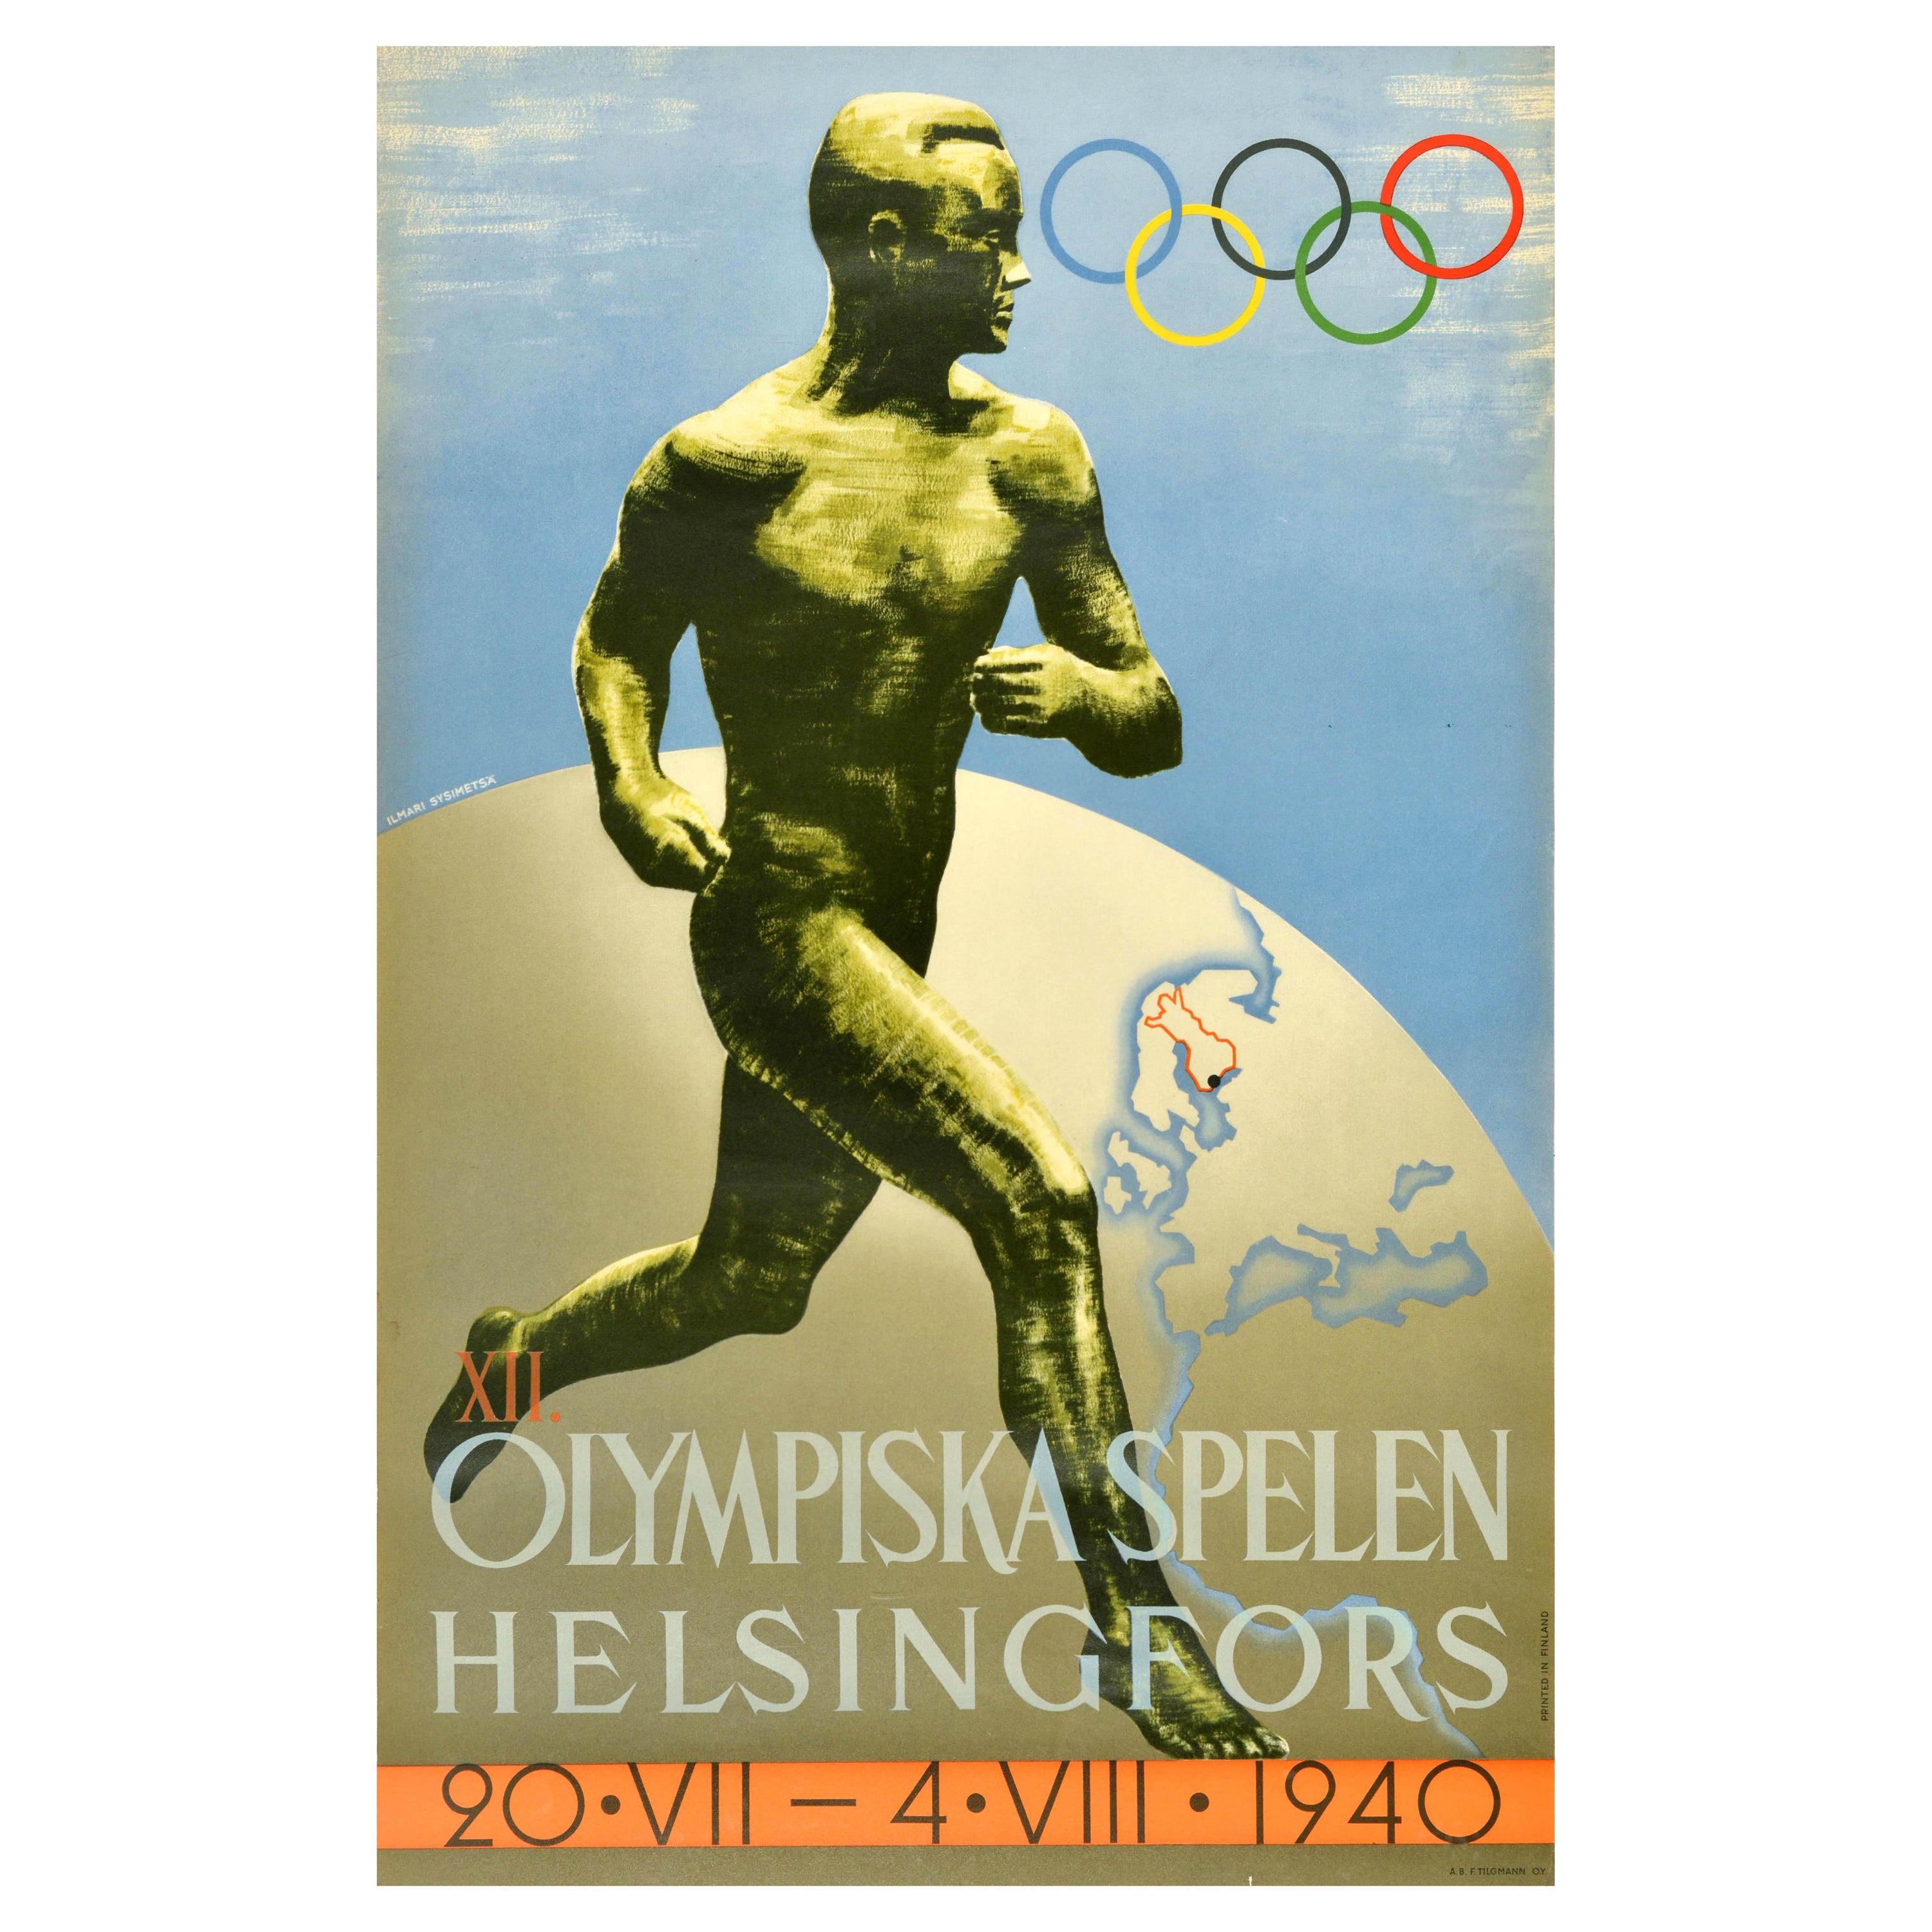 Original Vintage Sports Poster Olympic Games Helsinki 1940 Finland Athlete